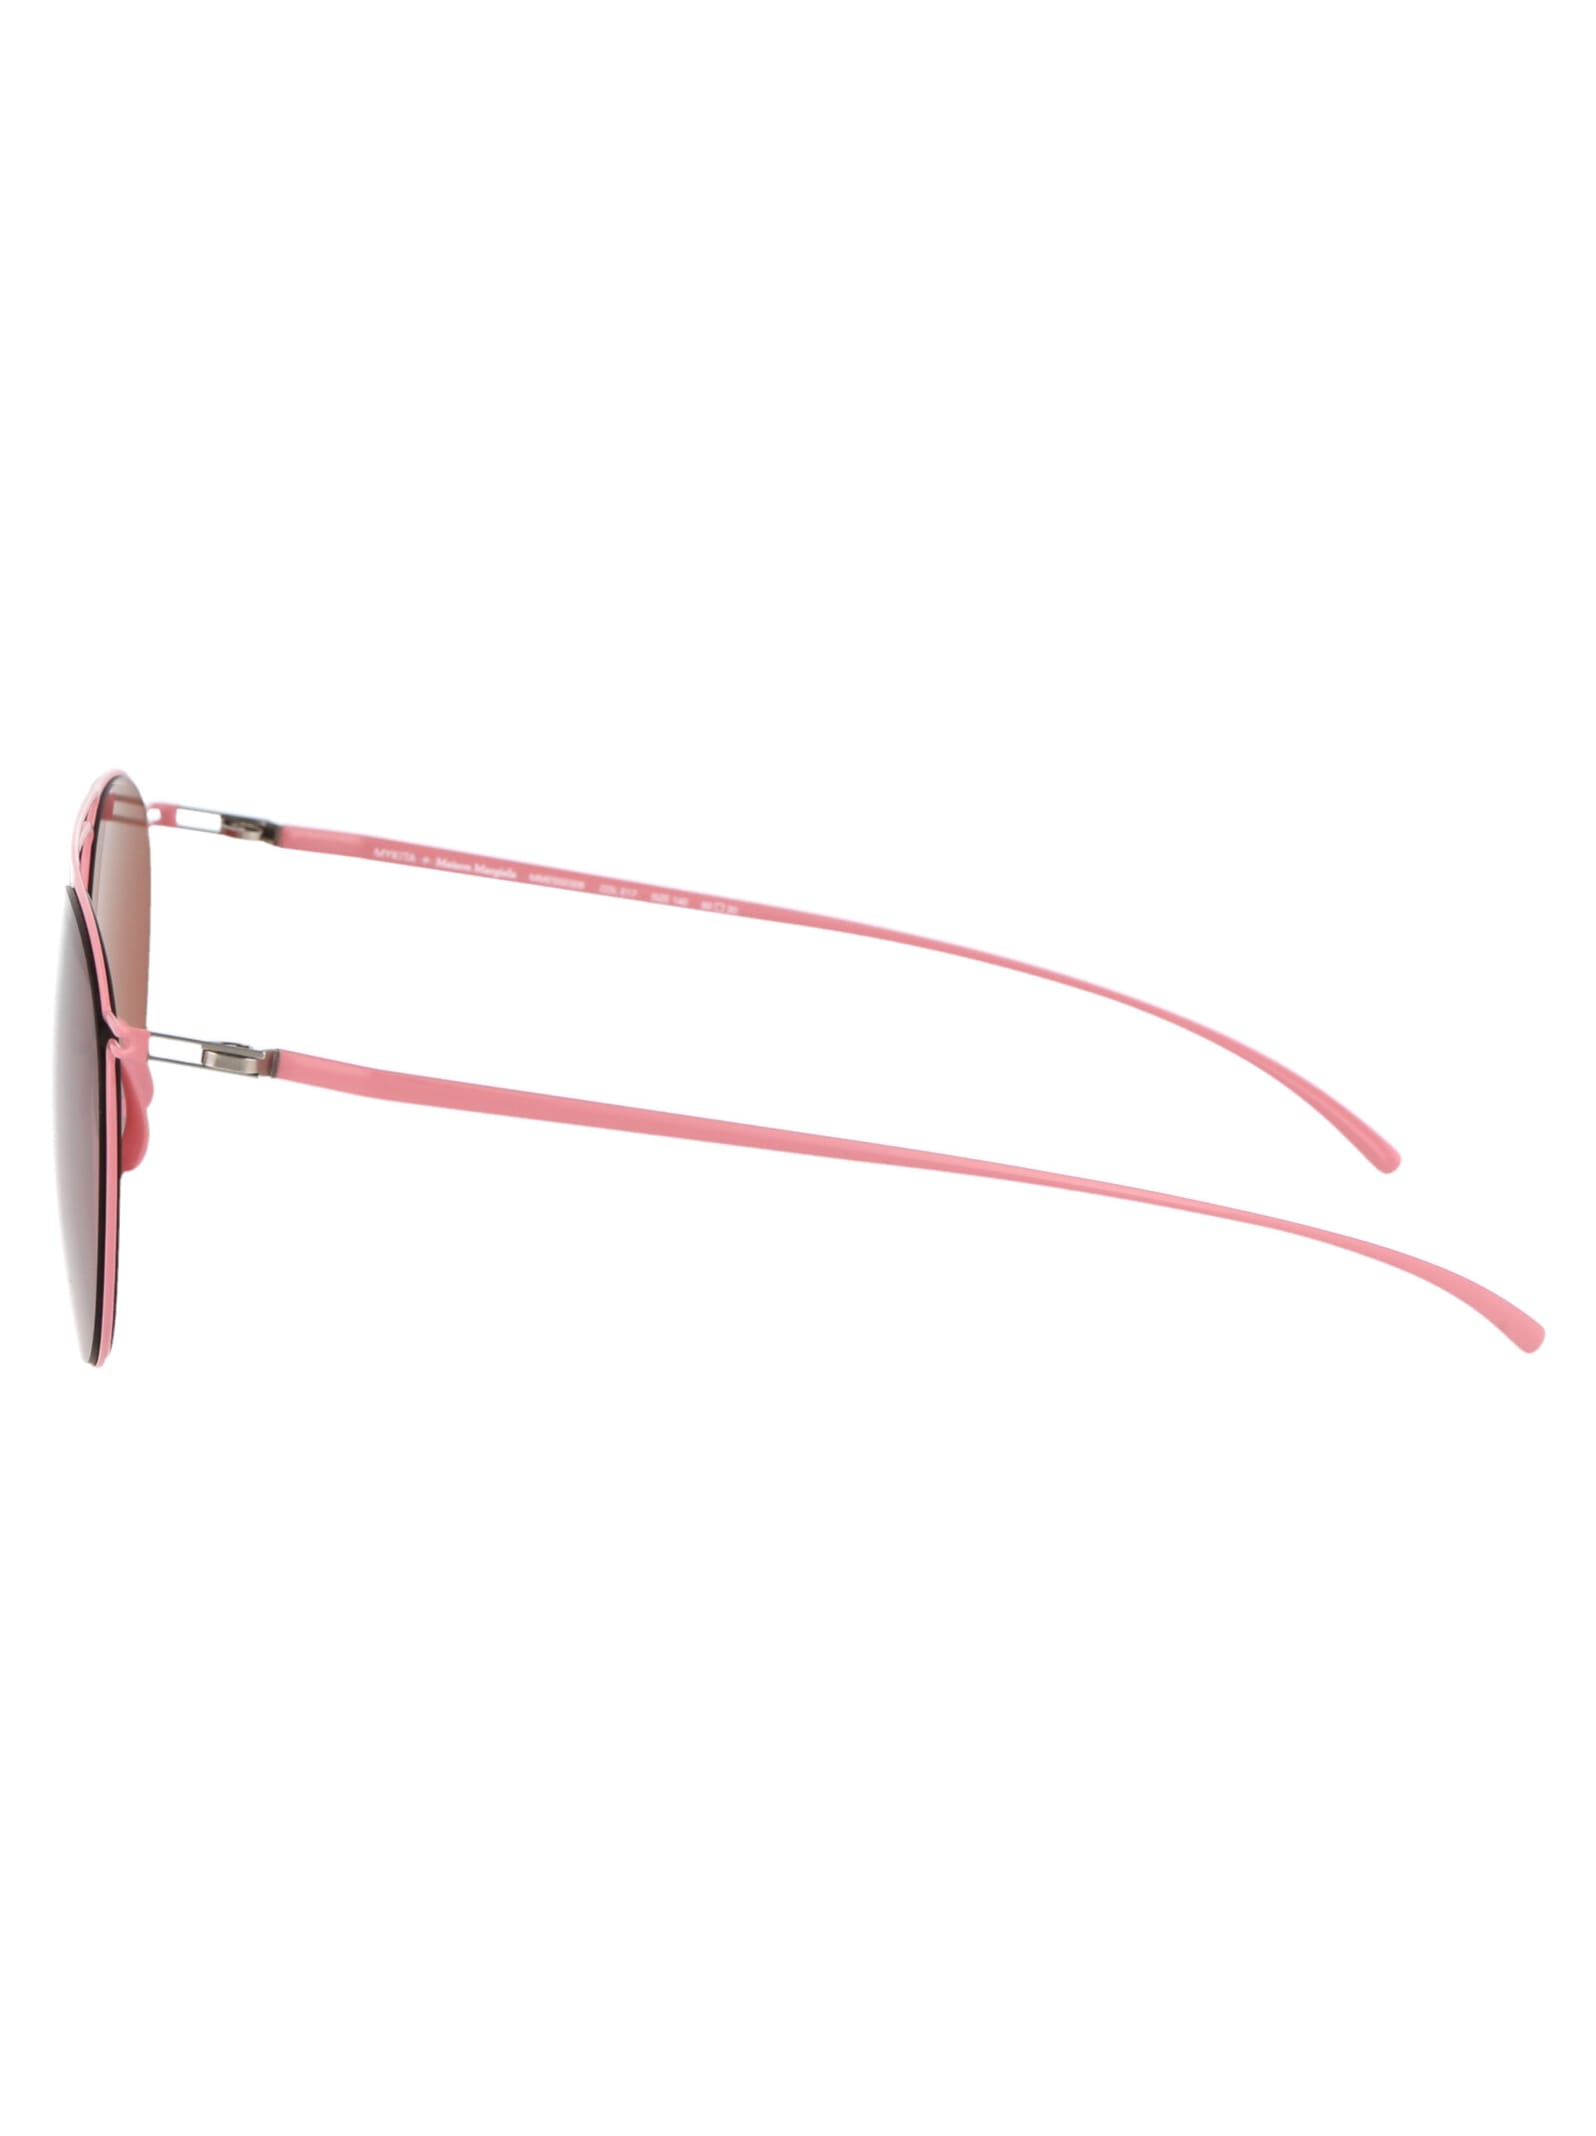 Shop Mykita Mmesse009 Sunglasses In 415 E17 Candy Rose Purple Solid